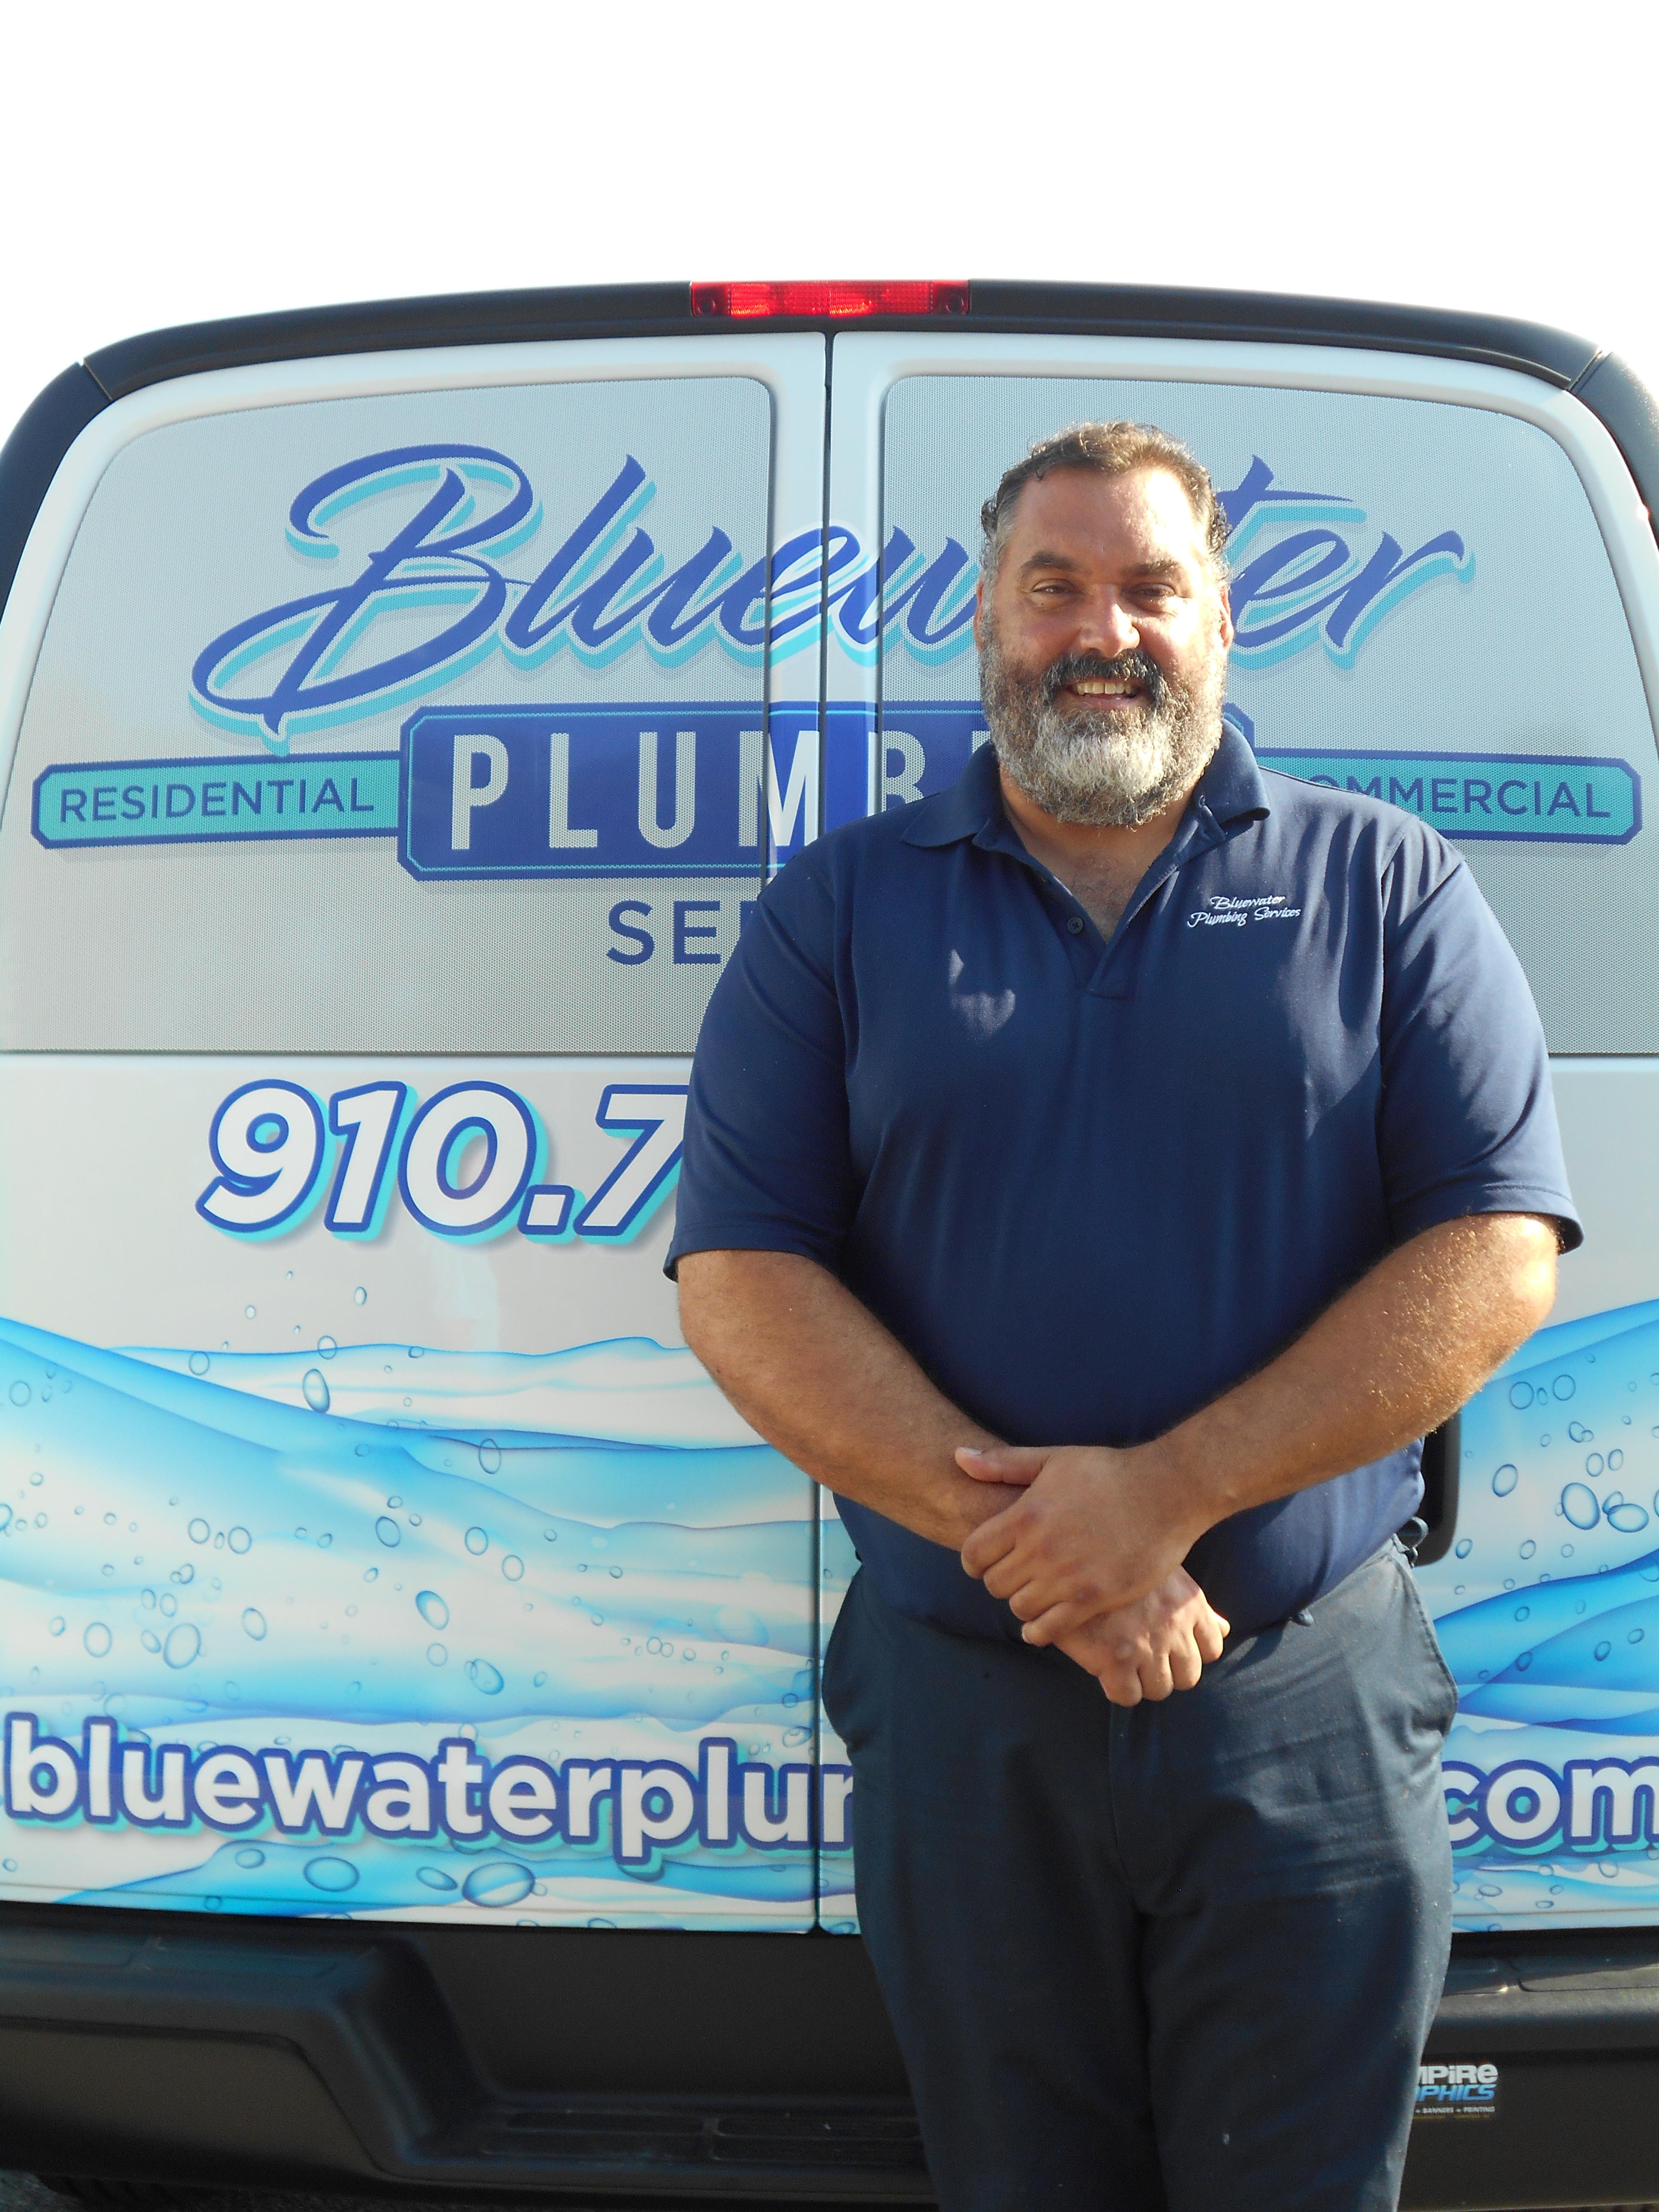 Bluewater Plumbing Service Photo